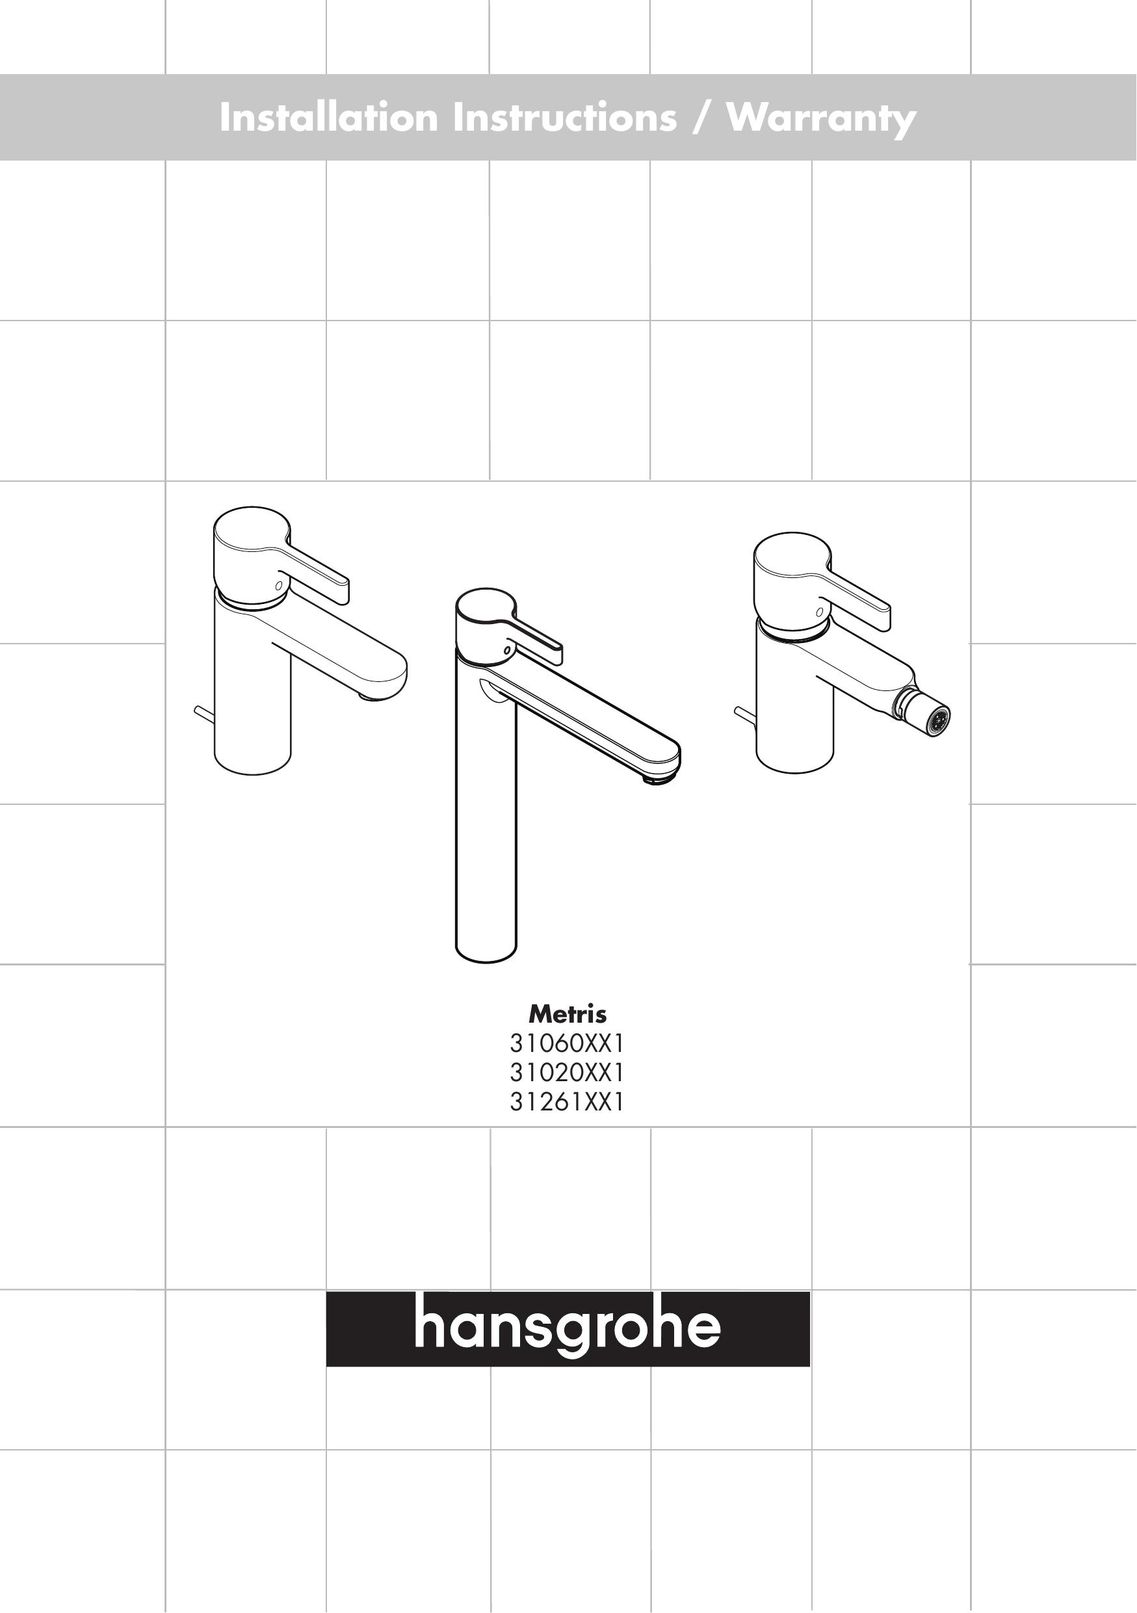 Hans Grohe 31060XX1 Indoor Furnishings User Manual